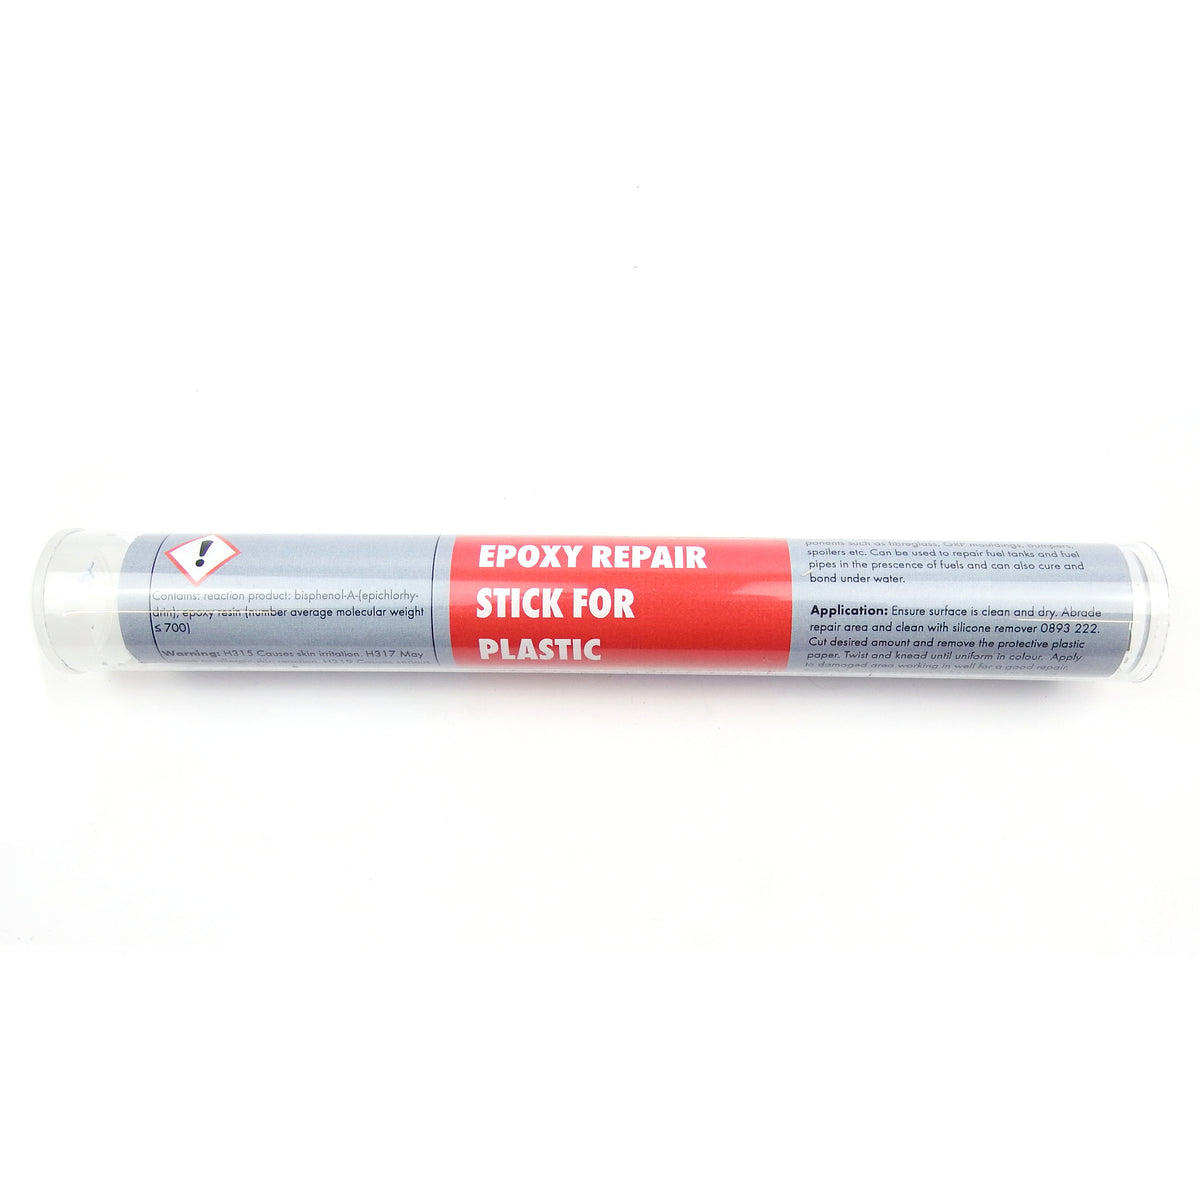 Wurth Putty Epoxy Repair Stick For Plastic Application - 175mm/180g